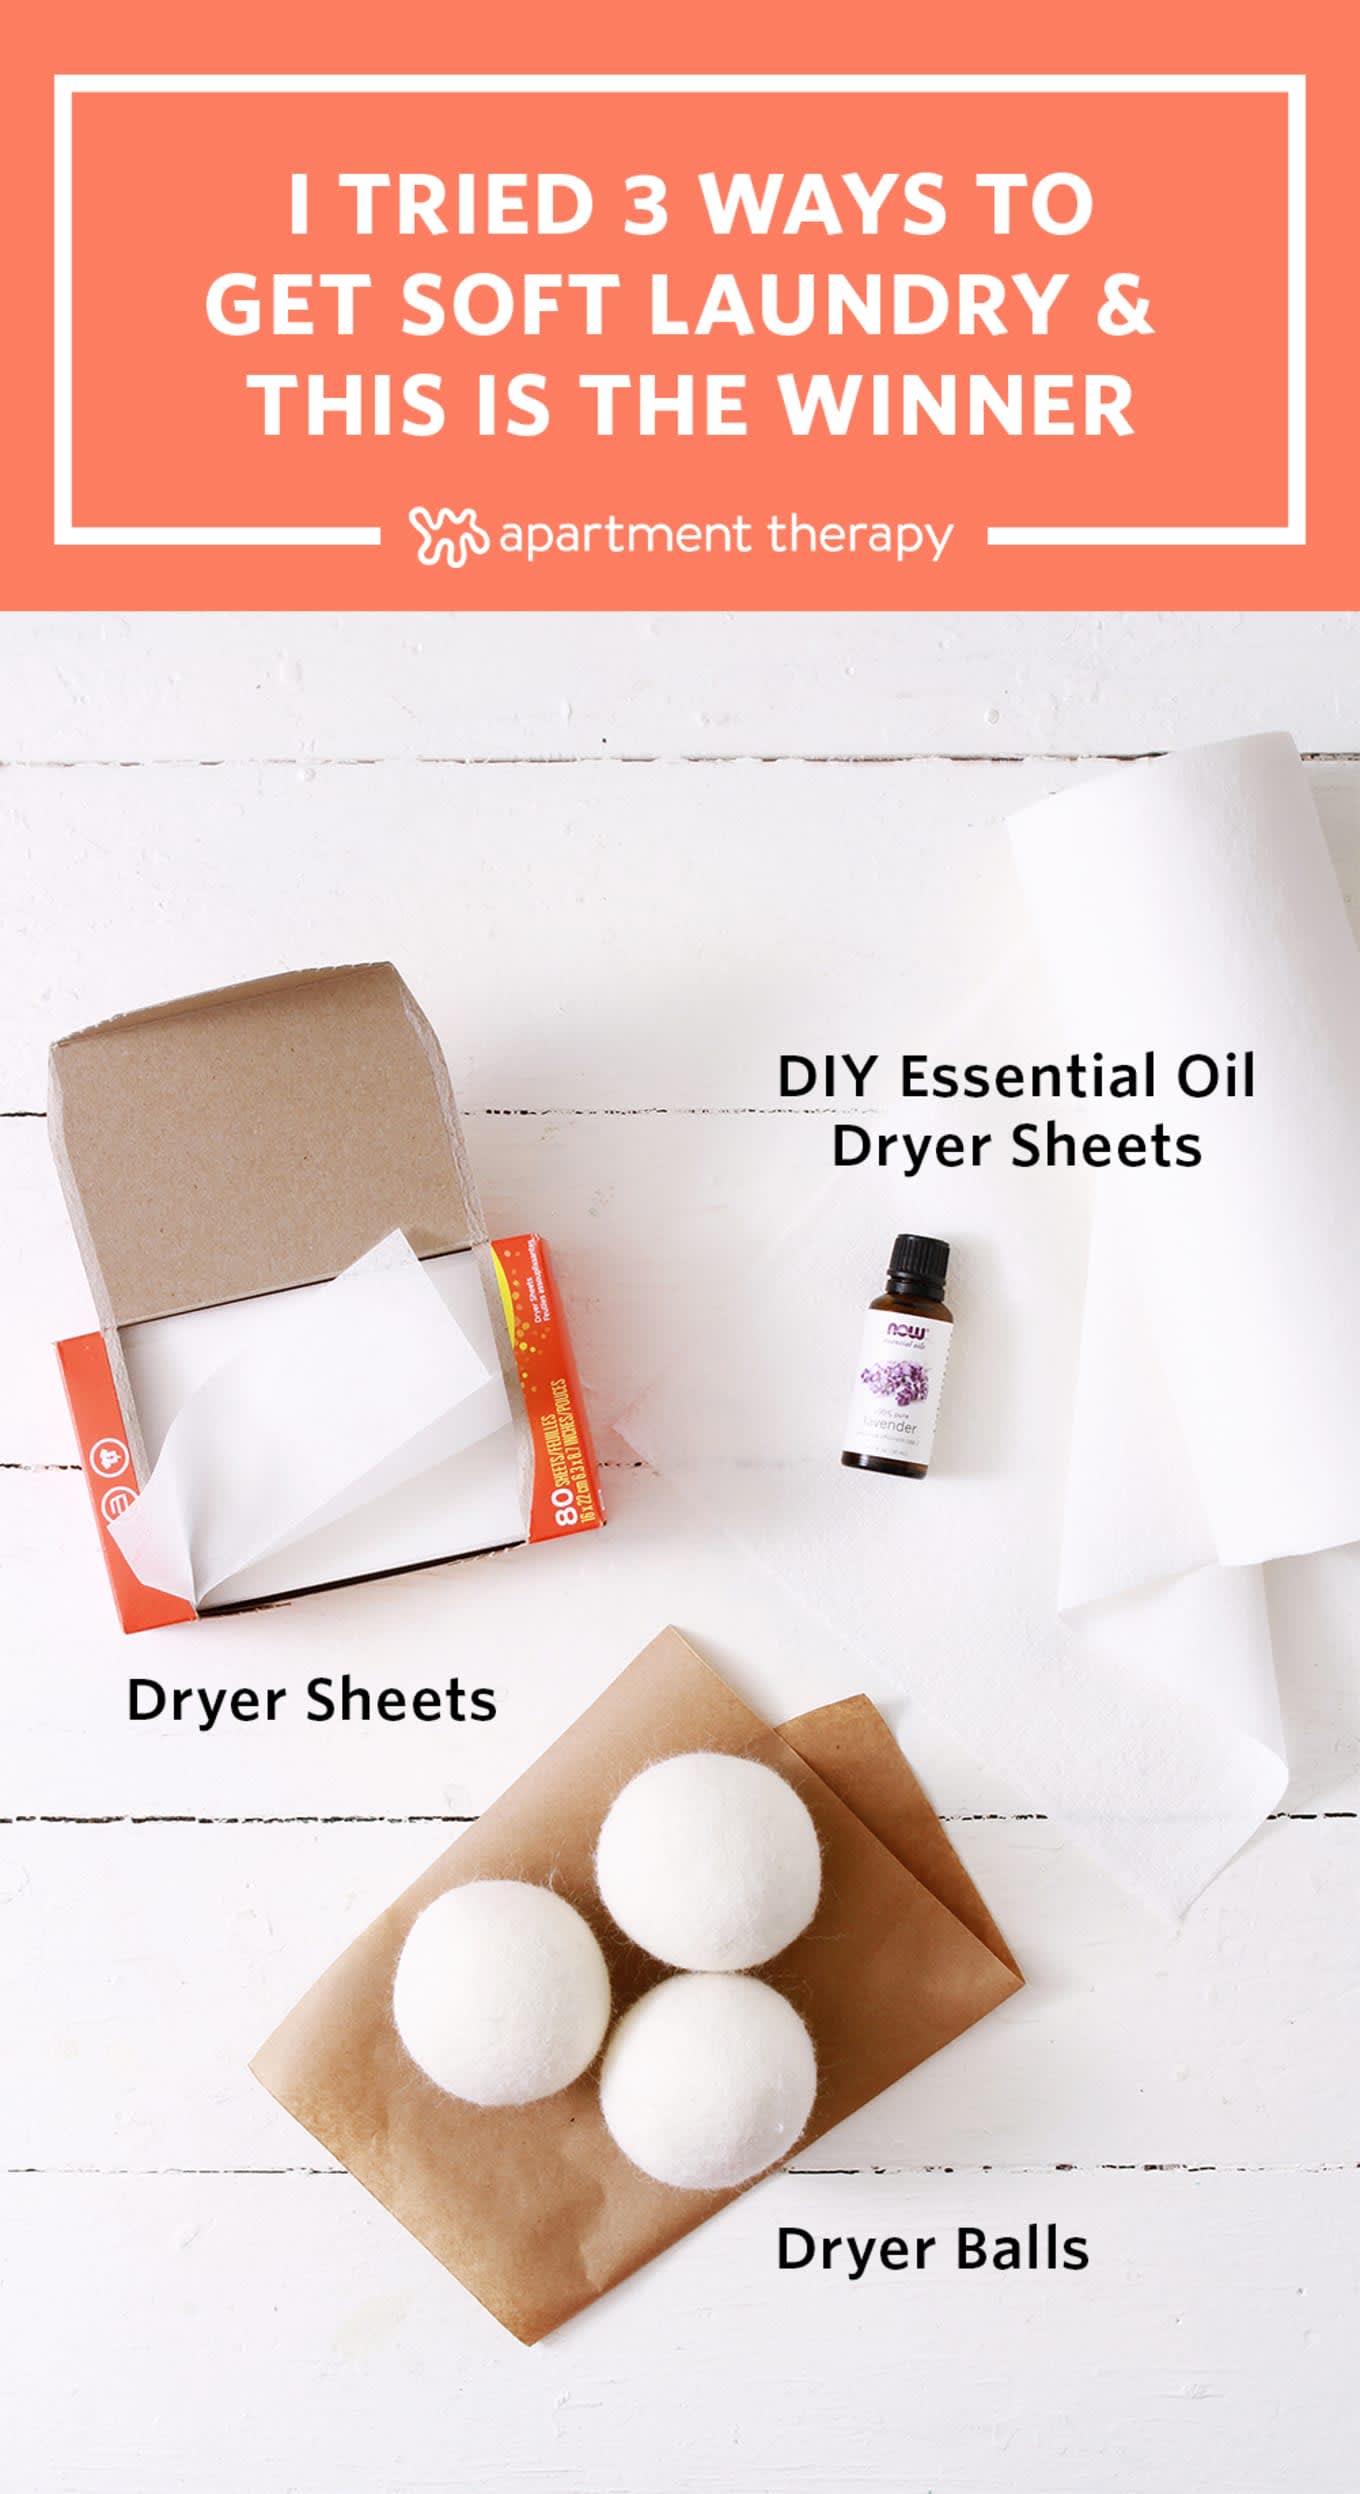 dryer balls vs sheets